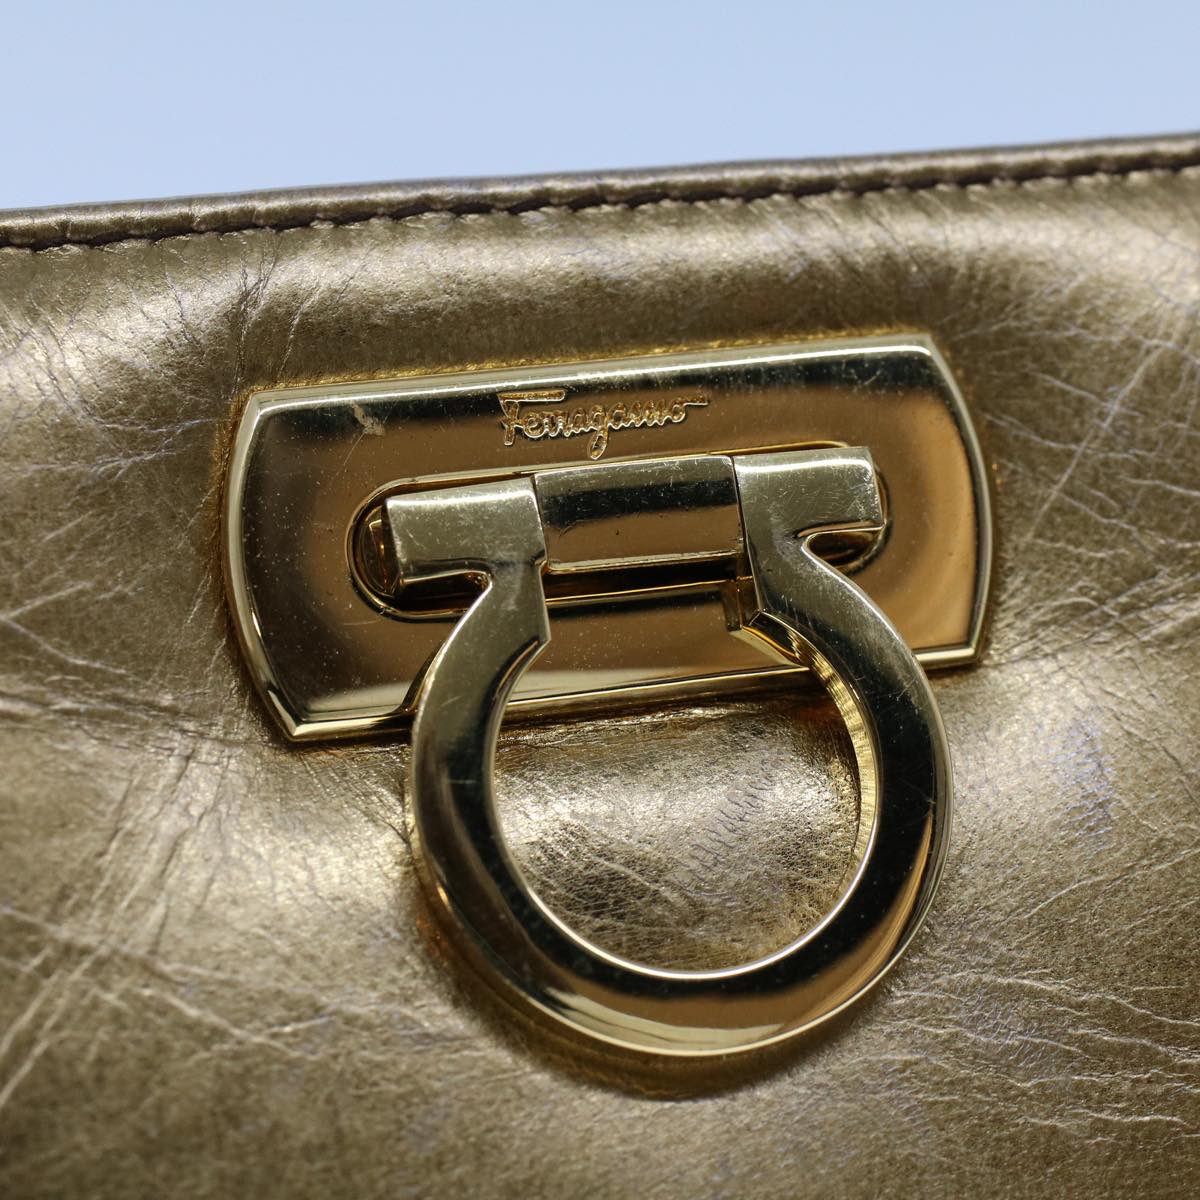 Salvatore Ferragamo Gancini Chain Shoulder Bag Leather Gold Auth 53278